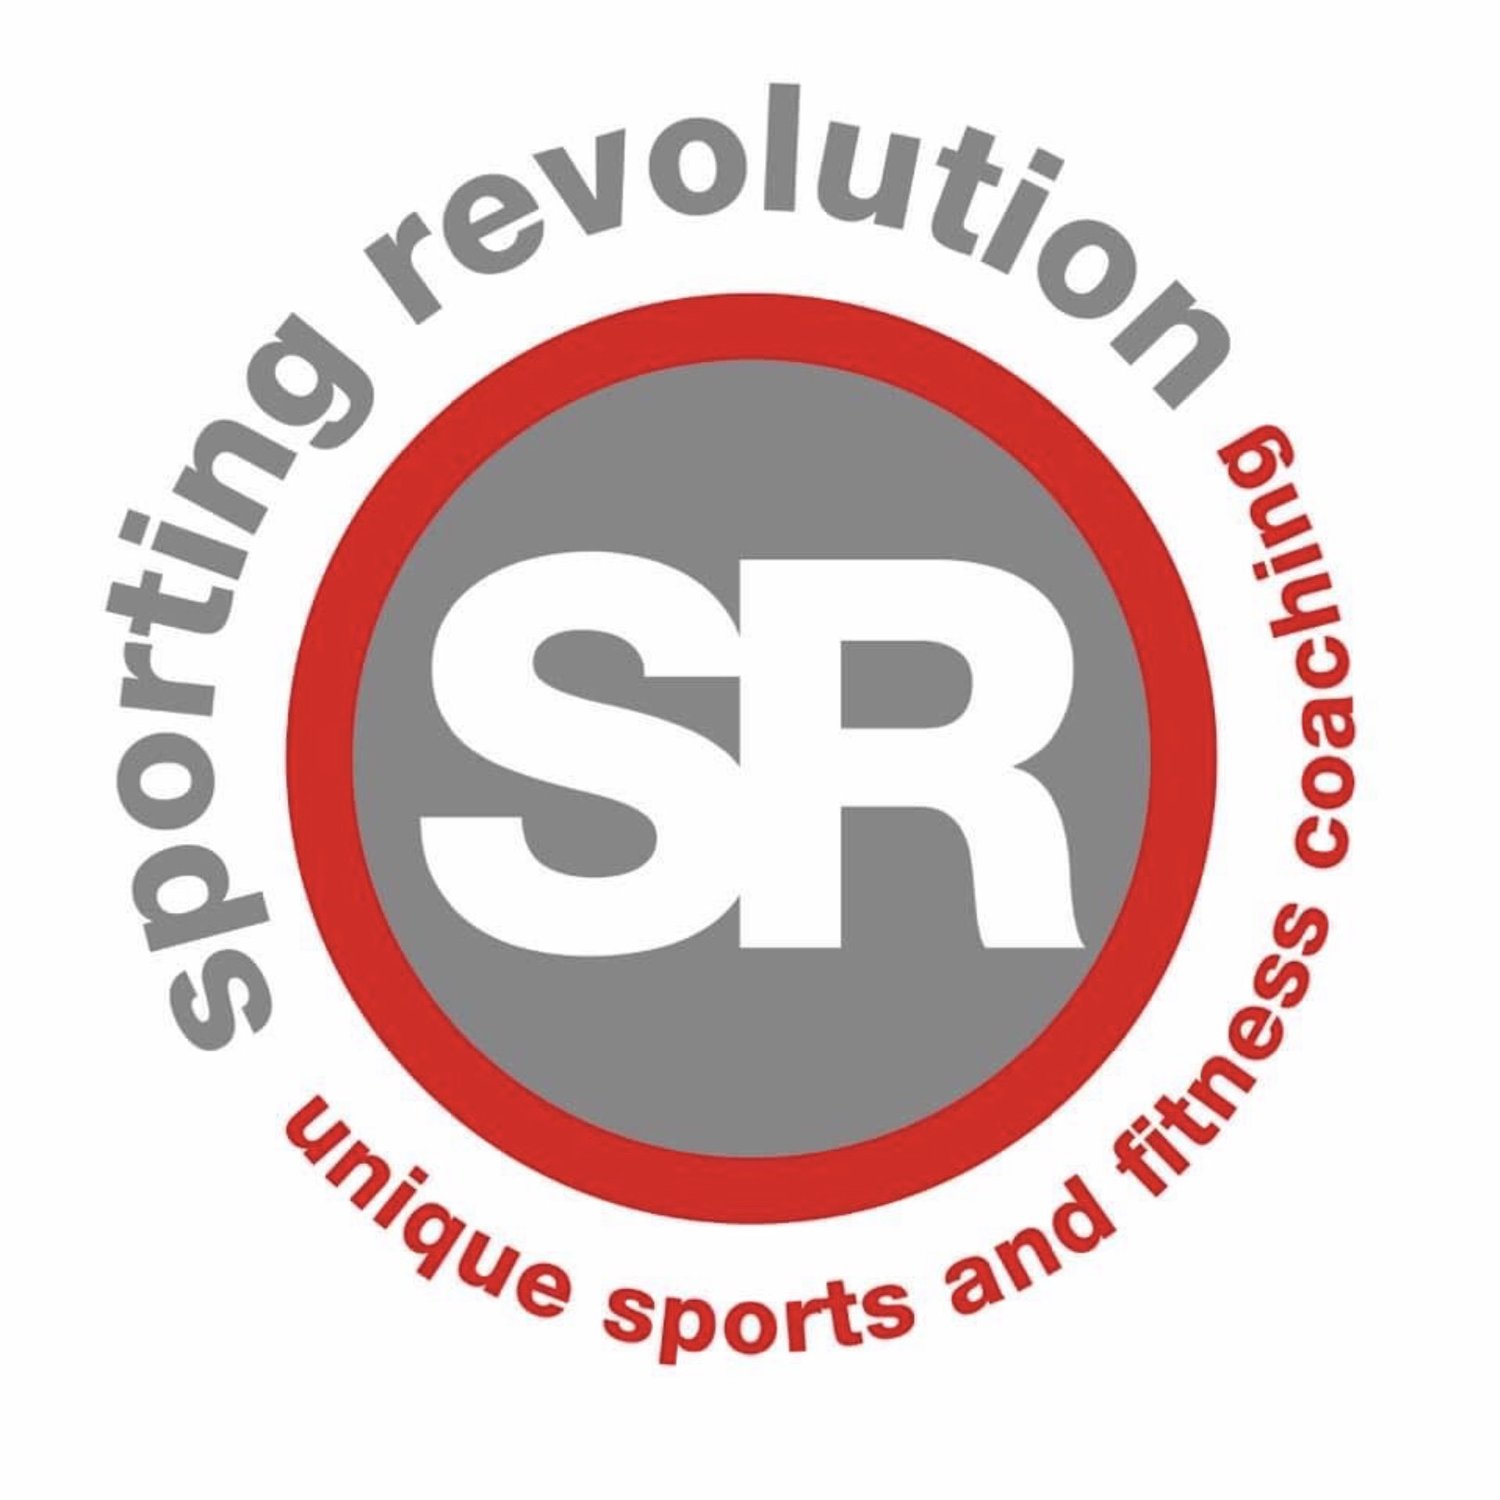 Sporting Revolution 